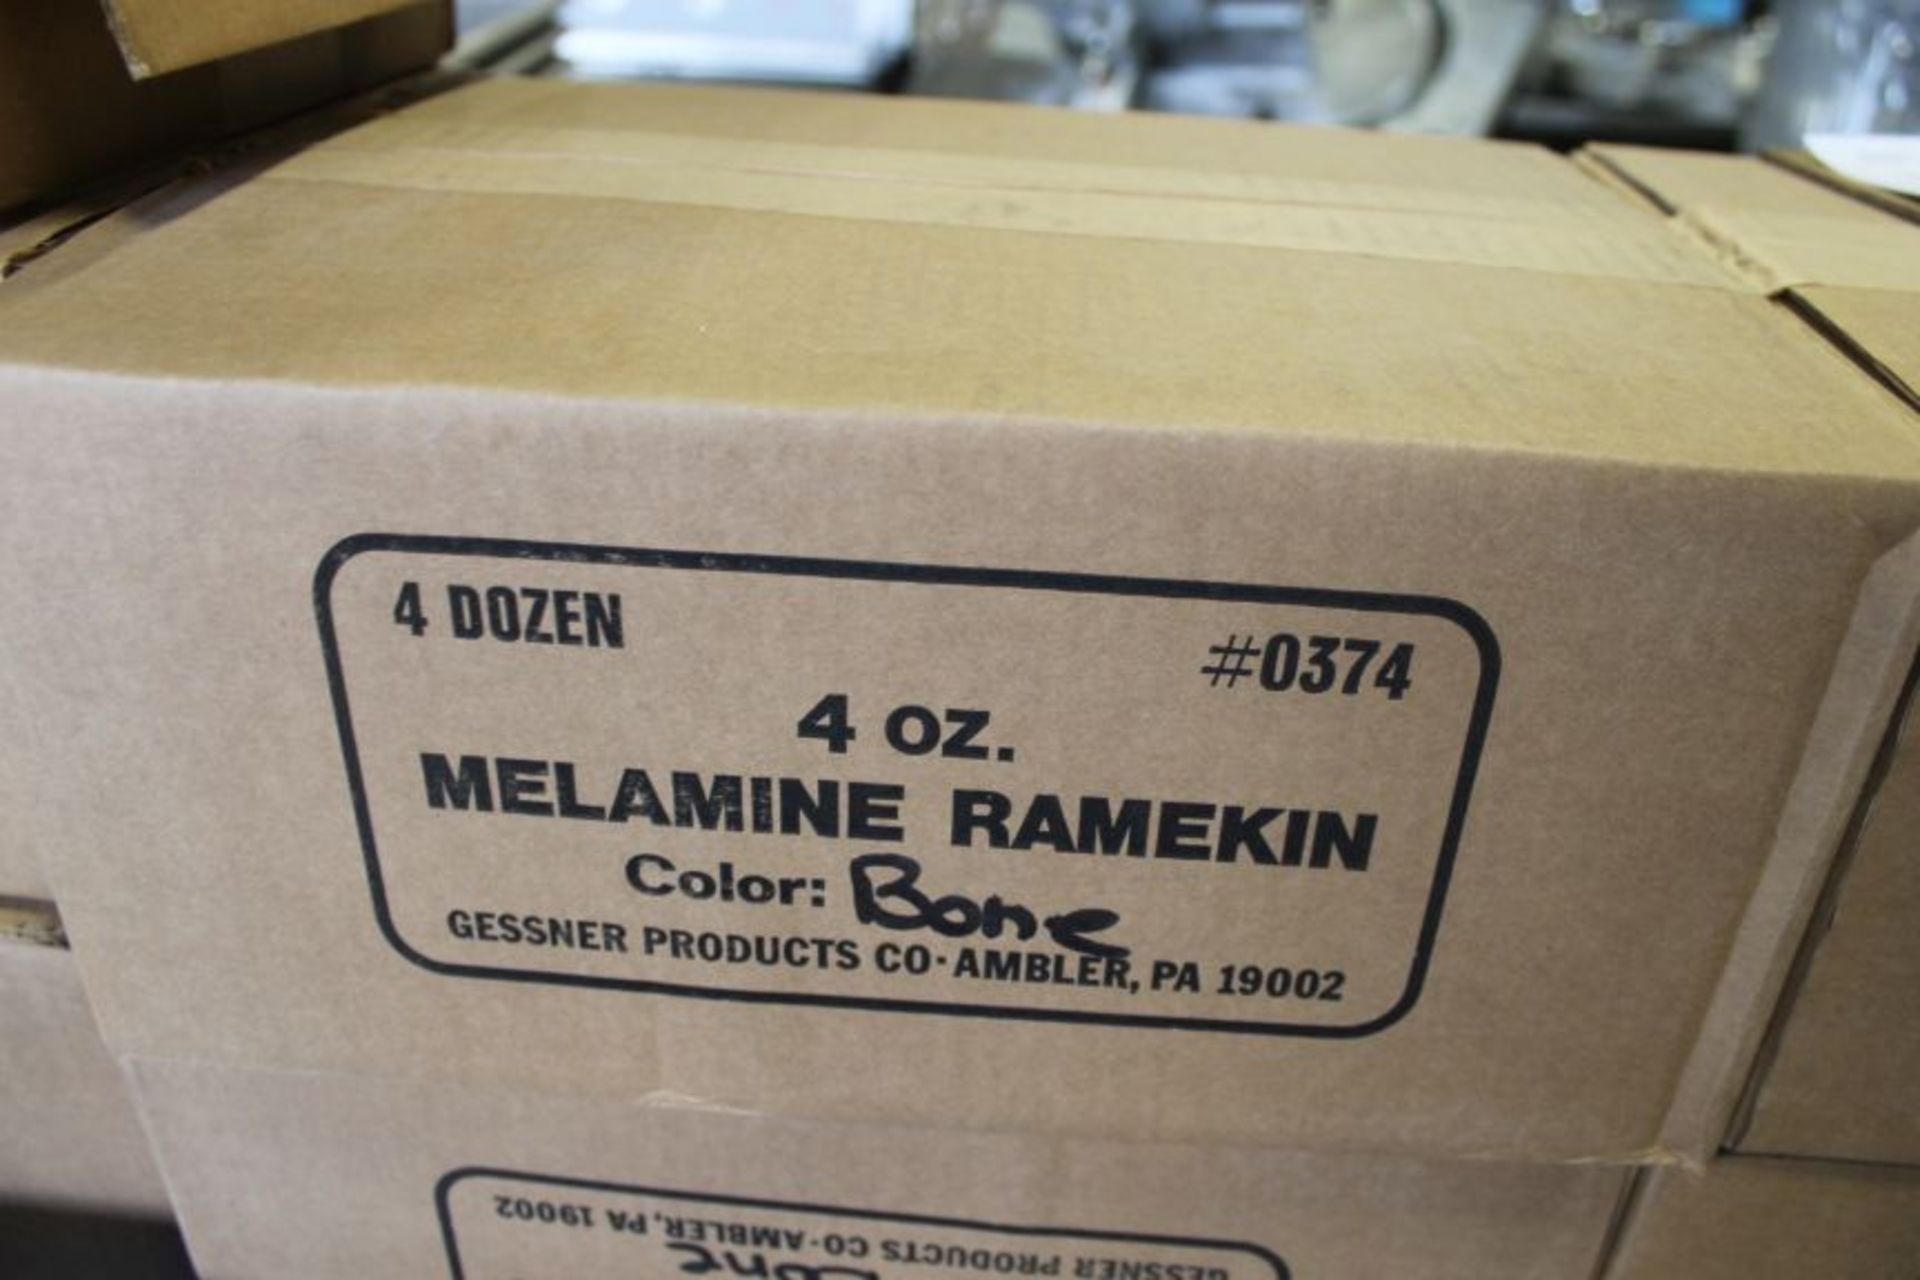 4oz Melamine Ramekins Bone Color - Box of 48 - Image 2 of 2